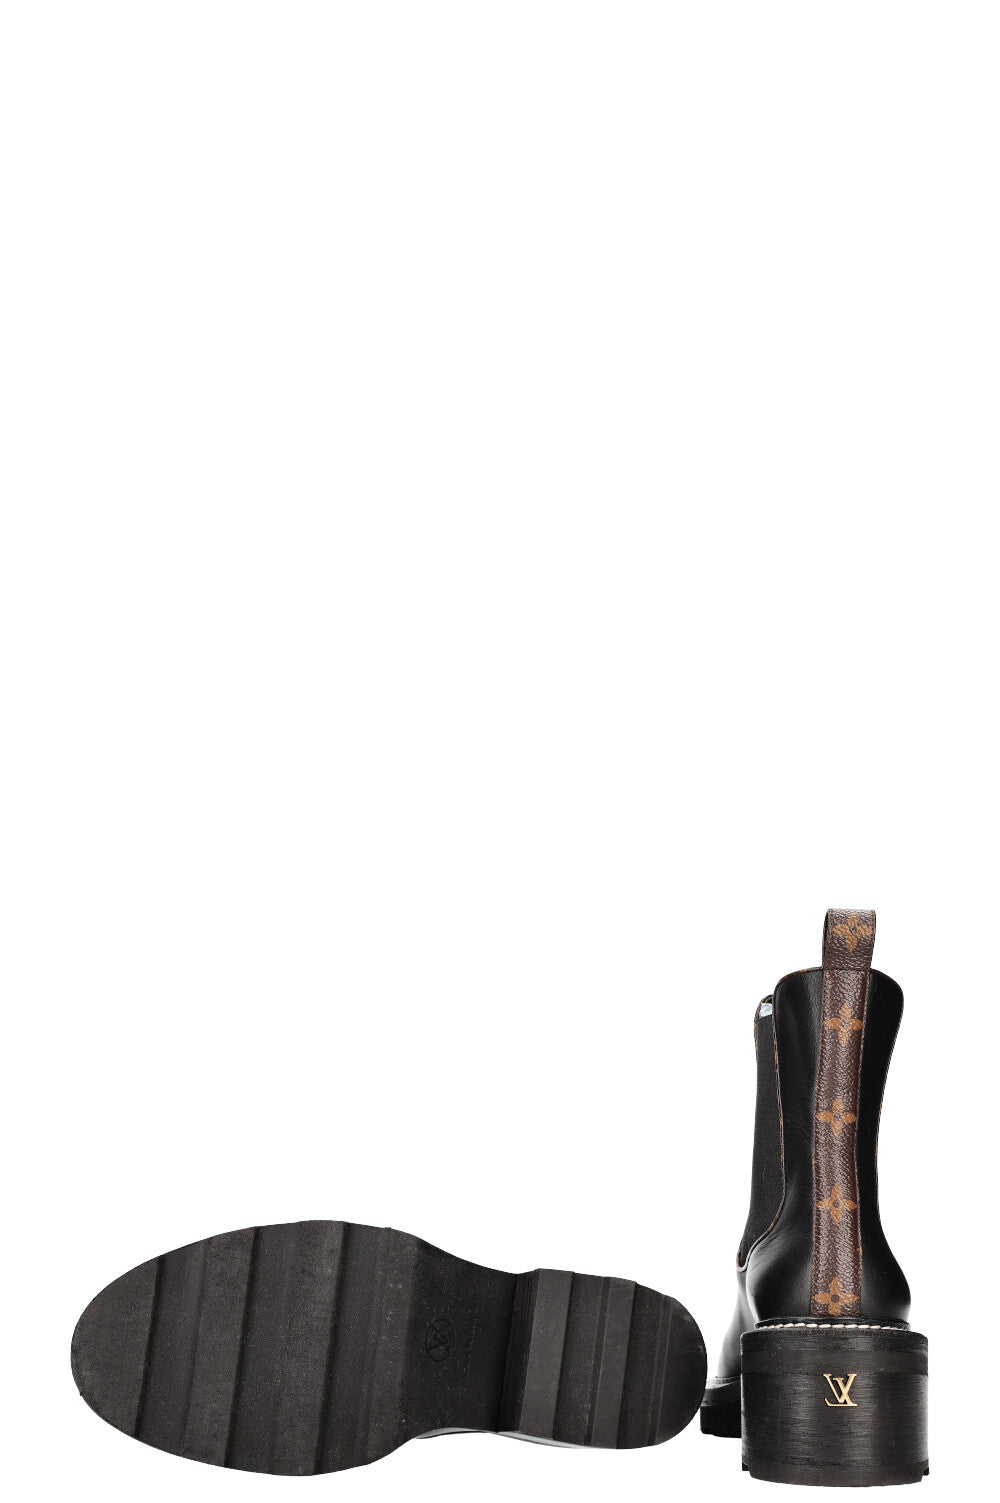 Louis Vuitton LV Beaubourg Ankle Boot BLACK. Size 38.0